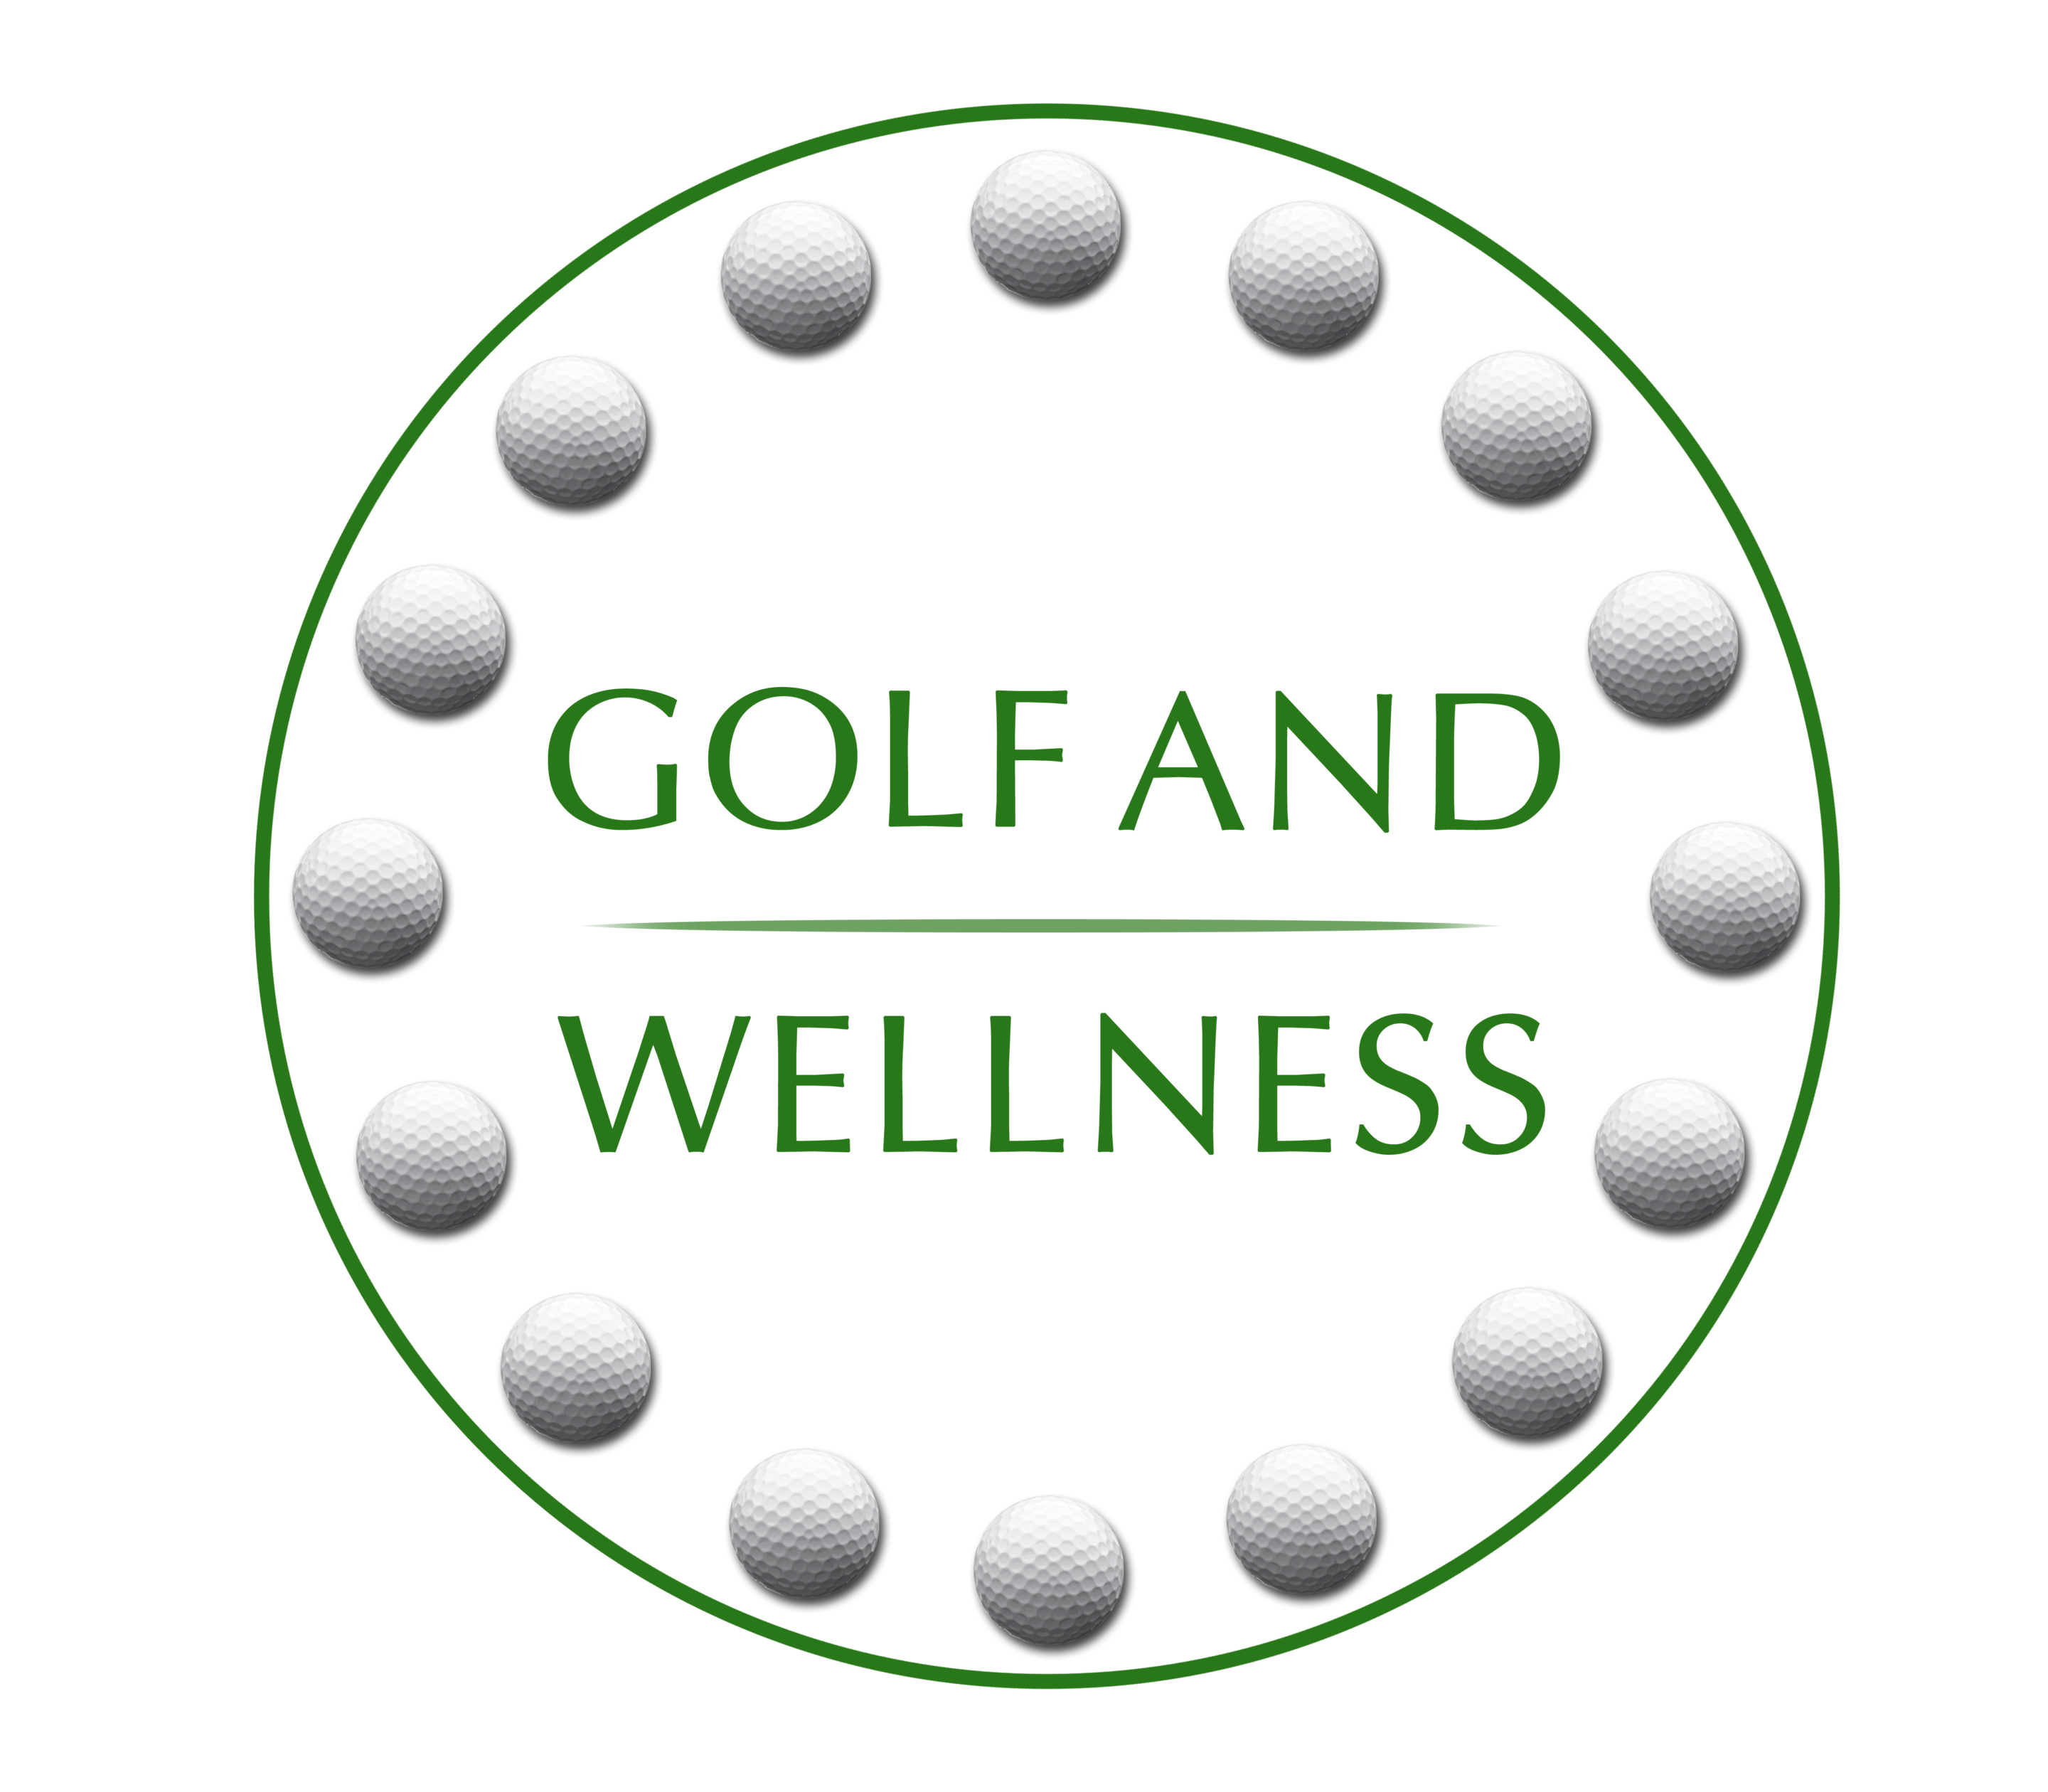 Golf and Wellness